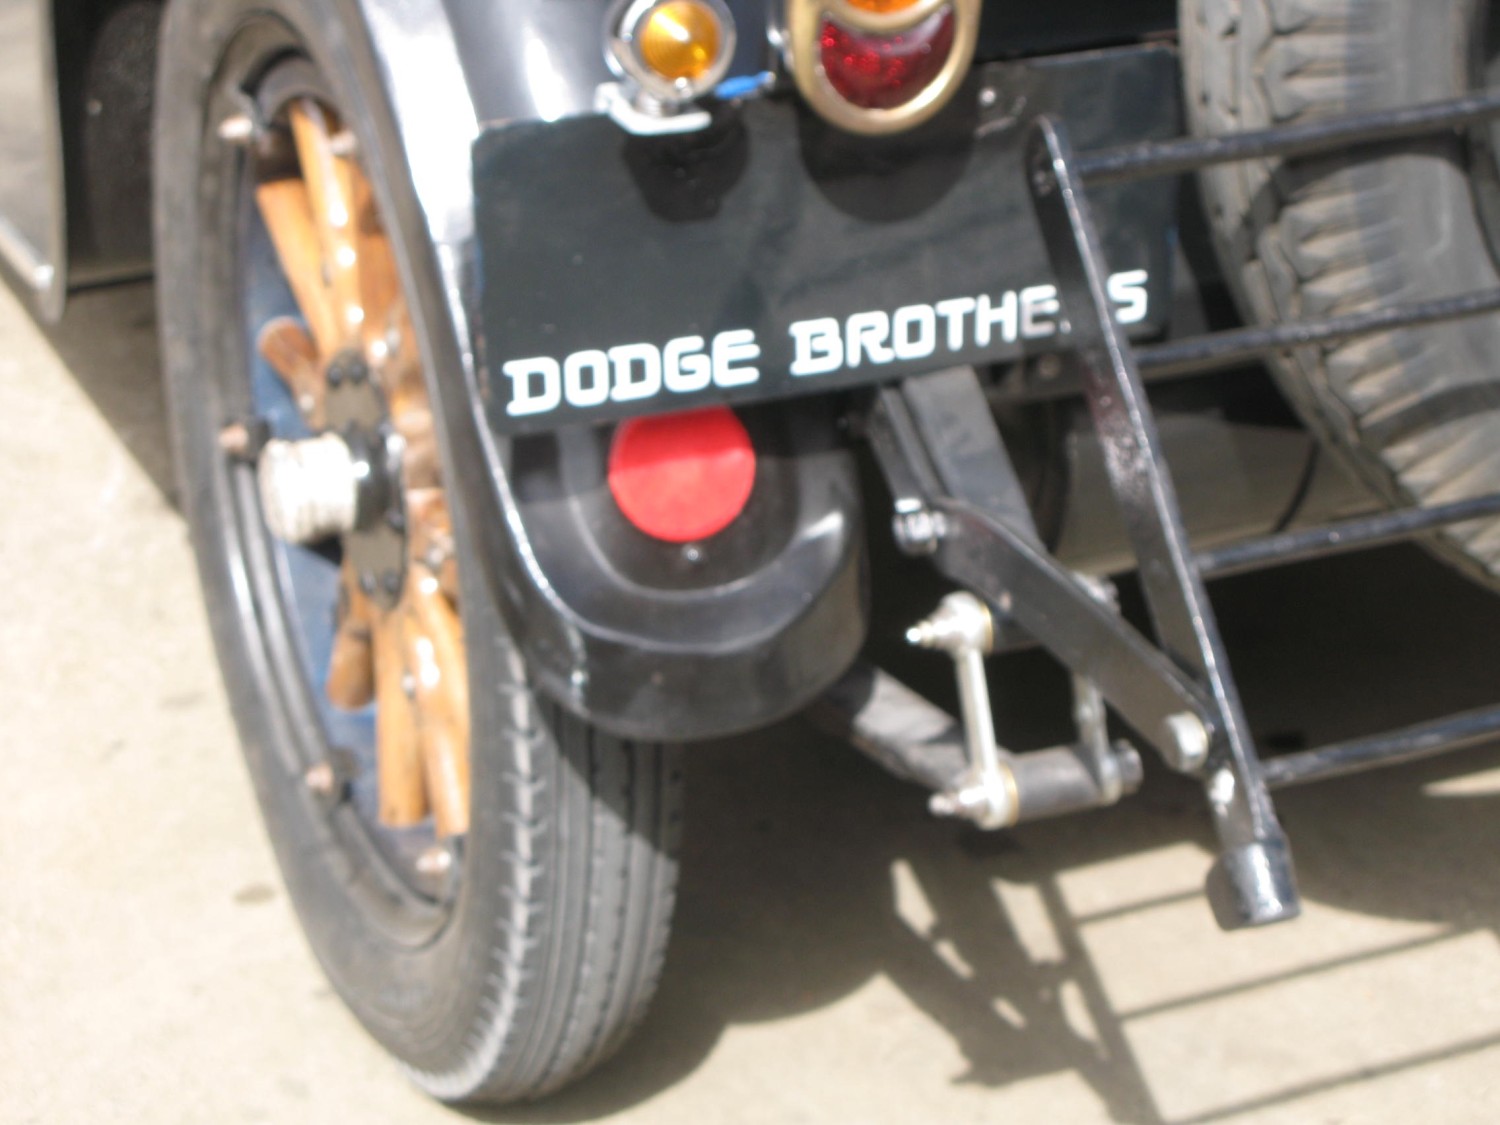 1925 Dodge Four